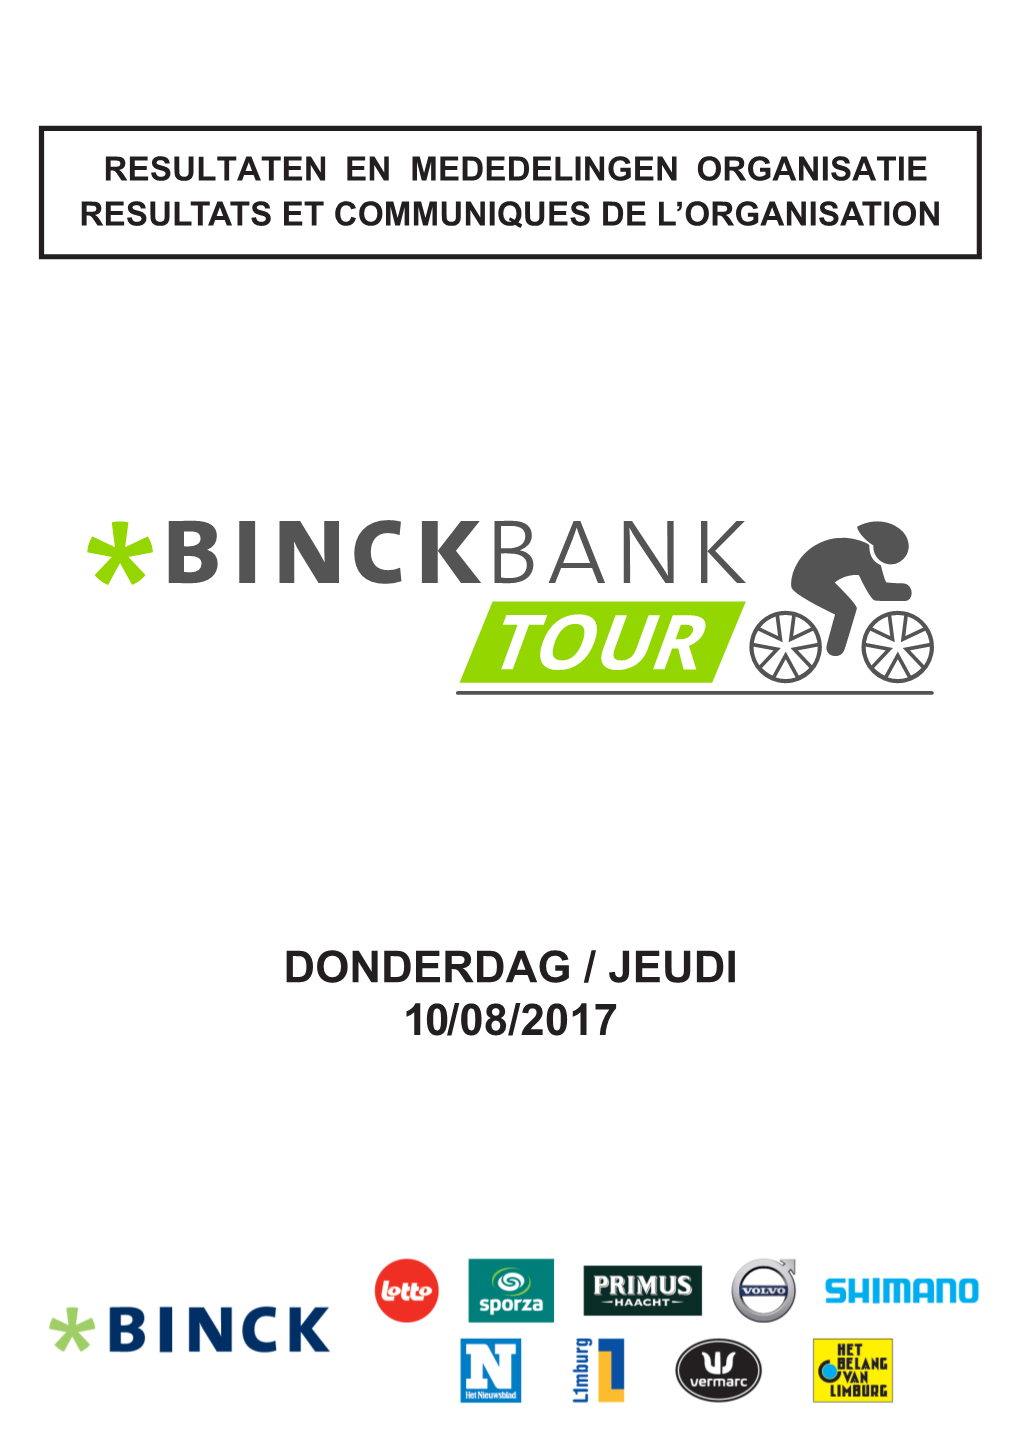 DONDERDAG / JEUDI 10/08/2017 Binckbank Tour 7-13/8/2017 - World Tour